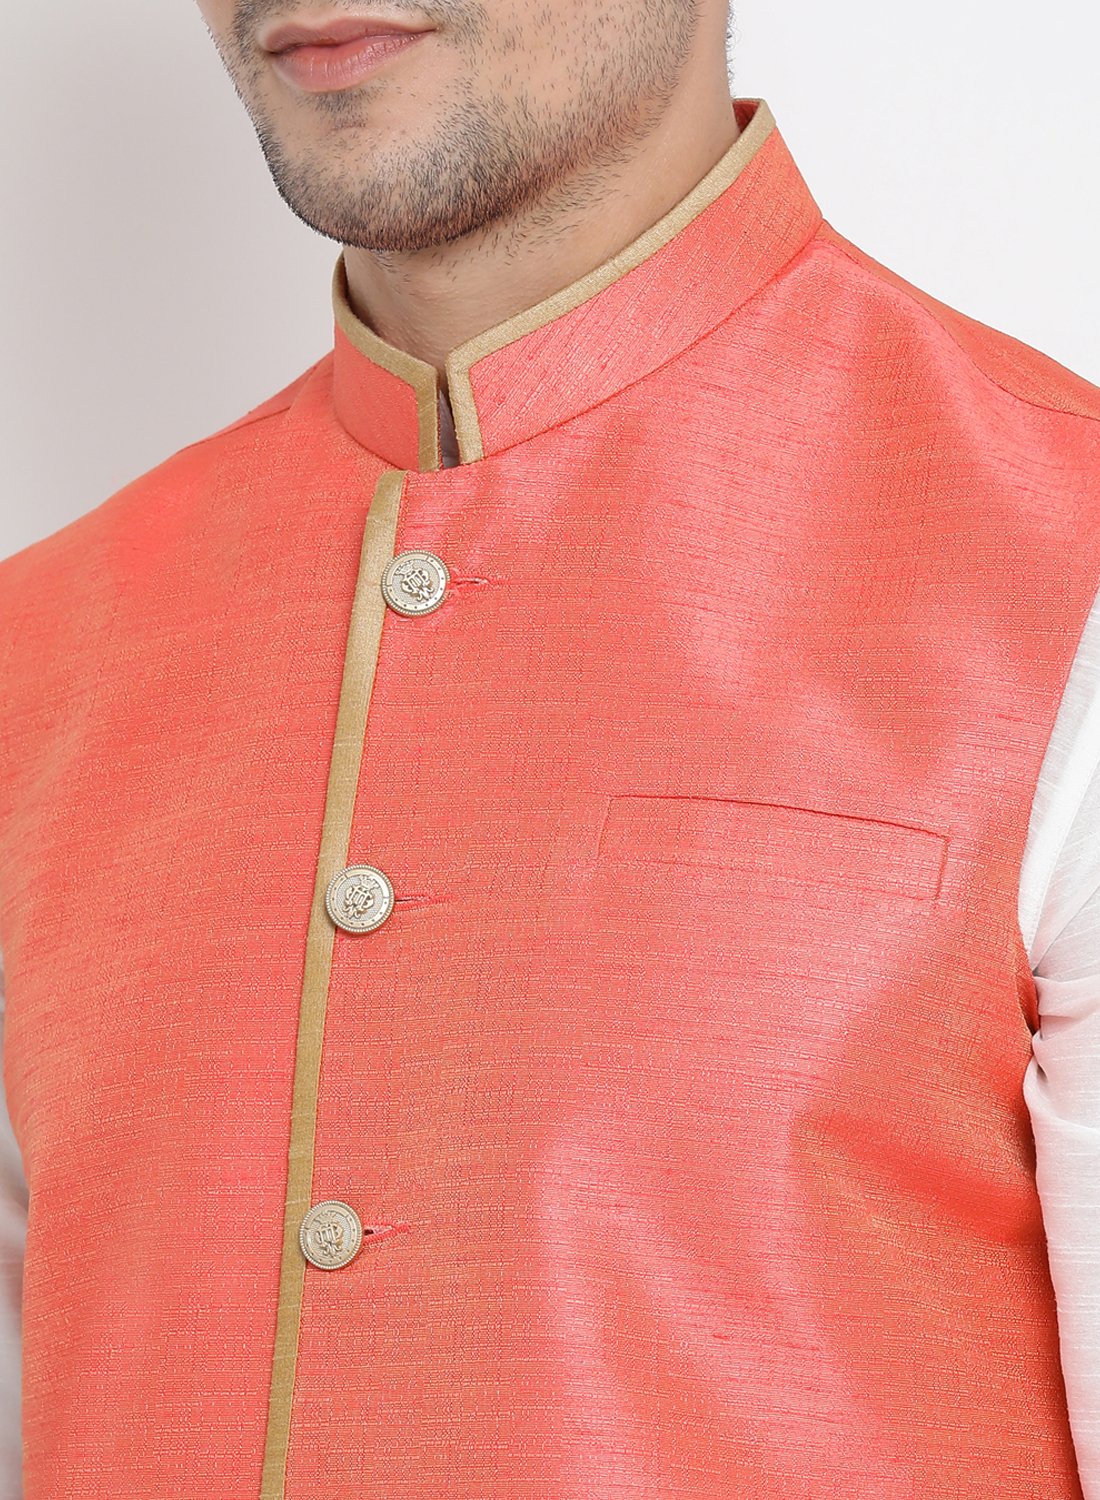 Men's White Cotton Silk Blend Ethnic Jacket, Kurta and Dhoti Pant Set